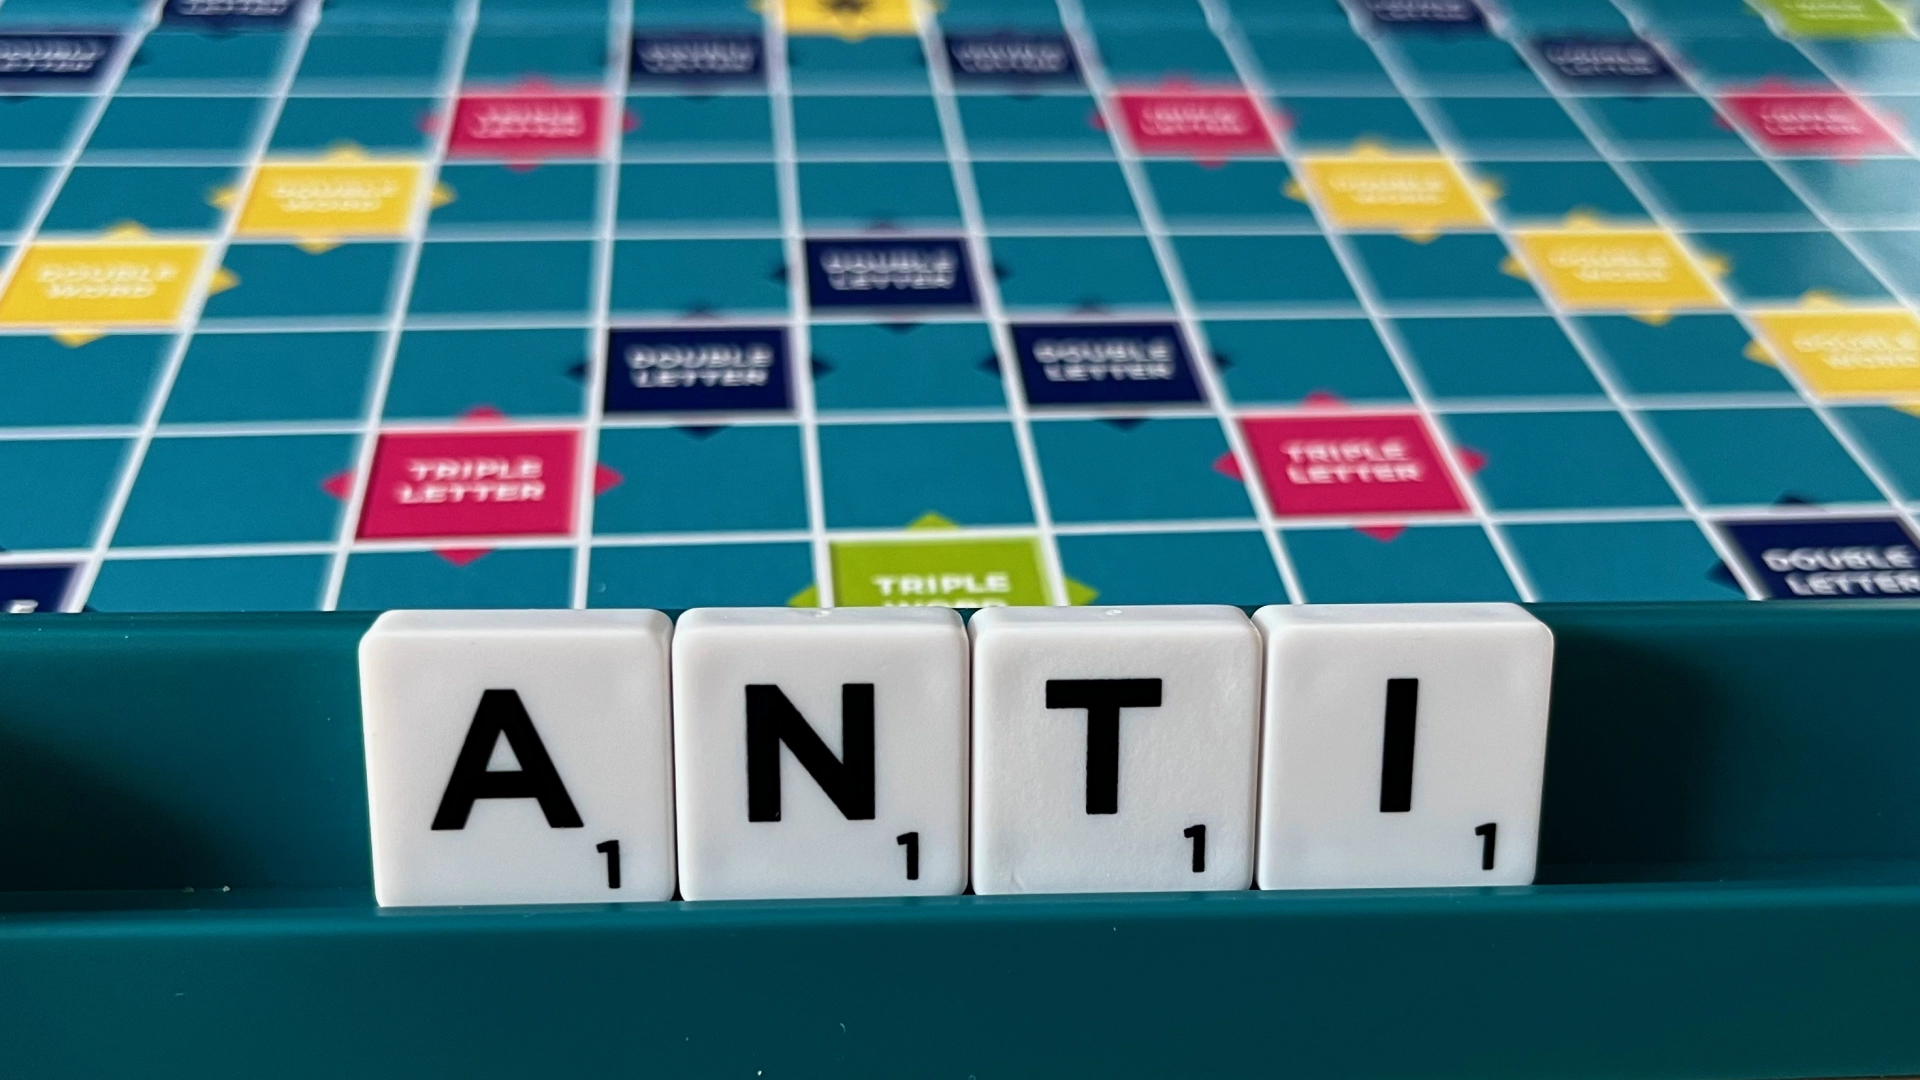 Anti- prefix in Scrabble